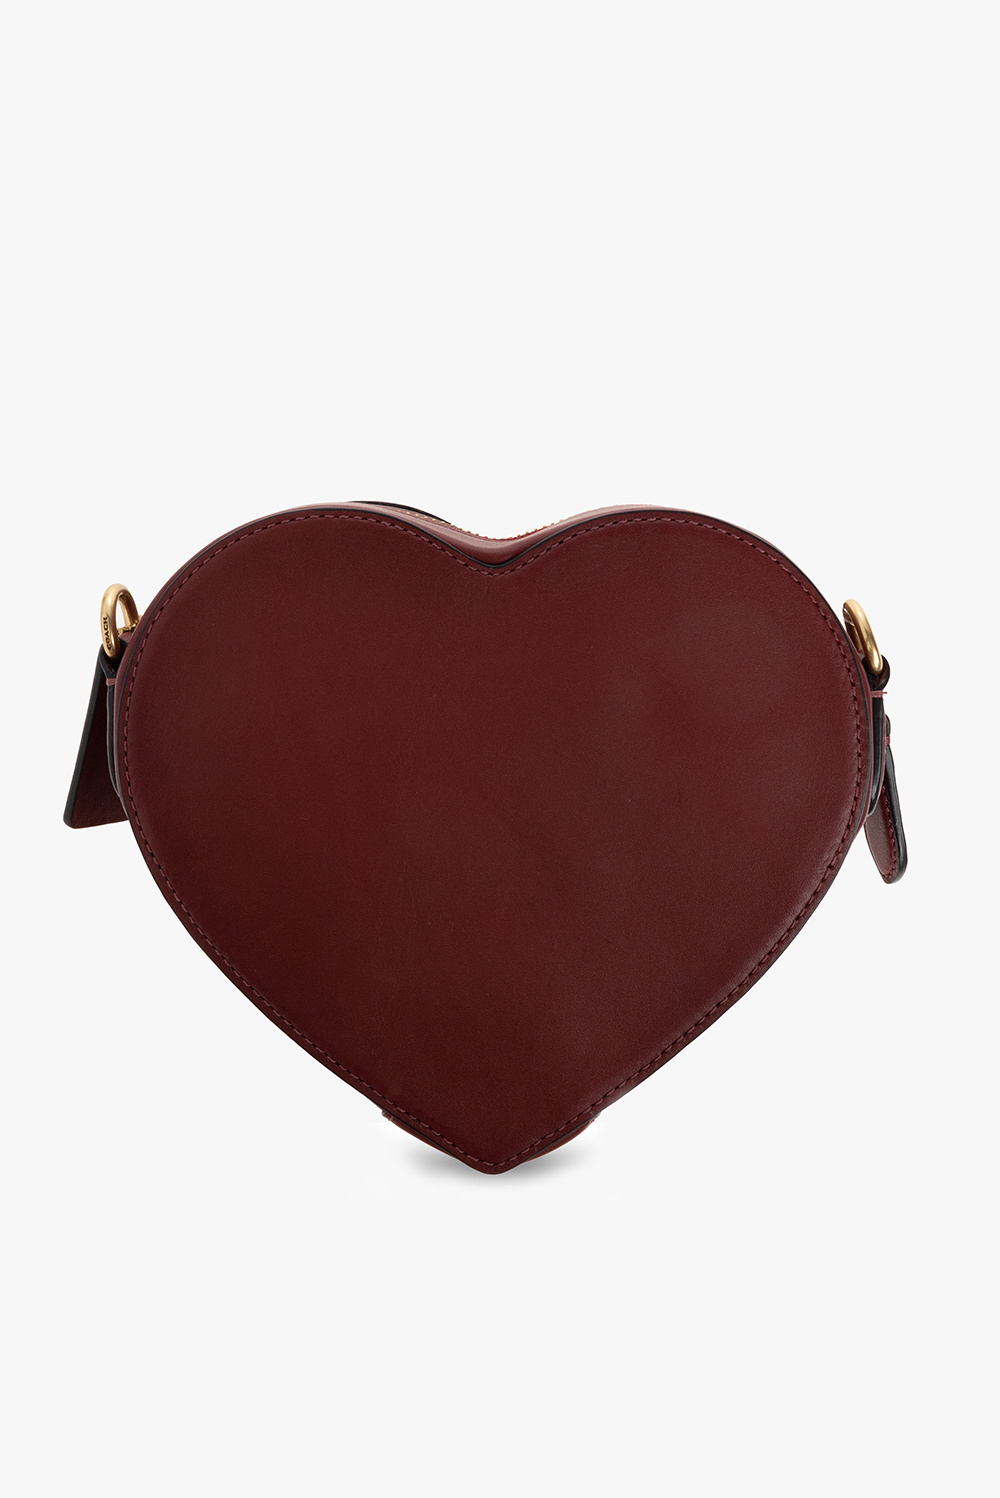 Coach 'Heart' shoulder bag, Women's Bags